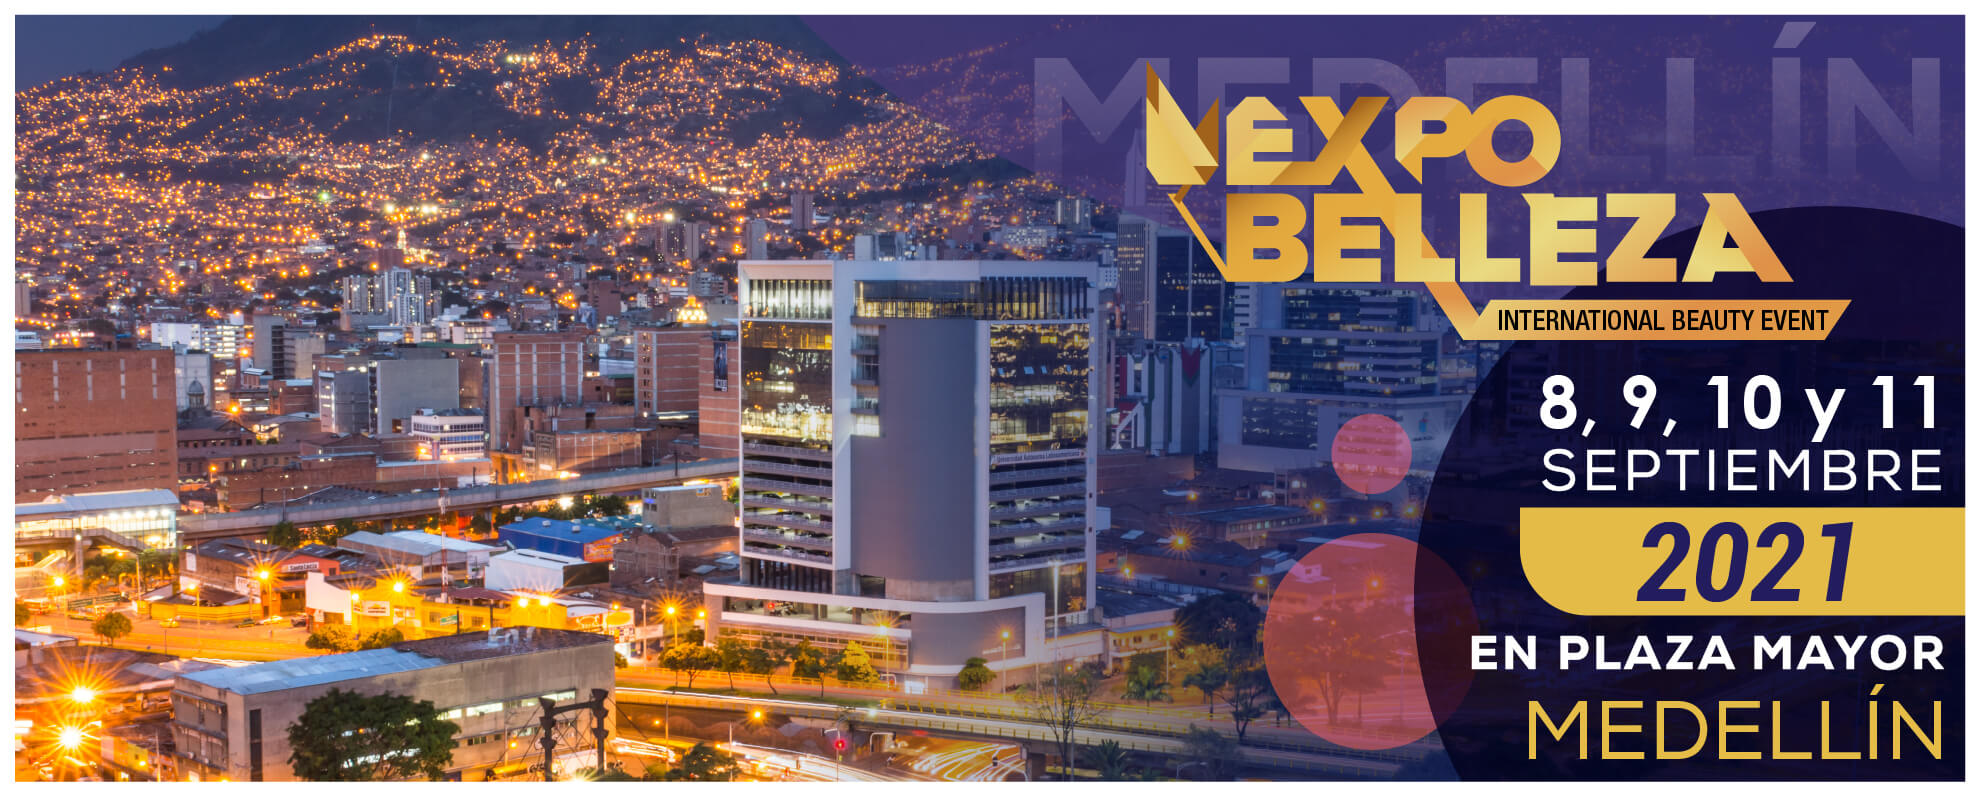 ExpoBelleza 2021 Medellin